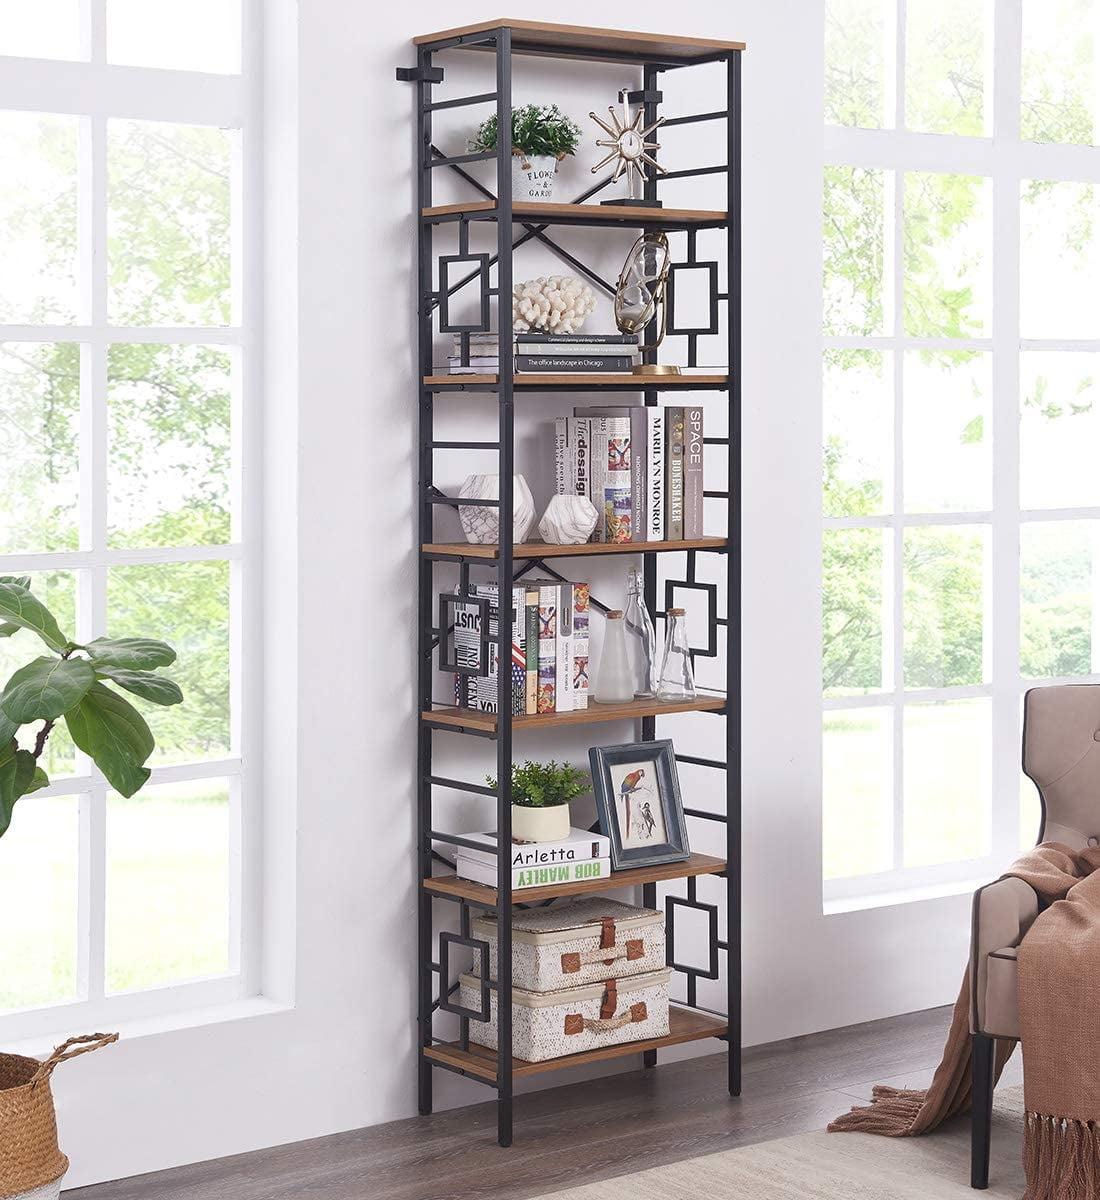 Details about   4/6Tier Wood Bookcase Wall Shelf Ladder Bookshelf Storage Display Rack Furniture 